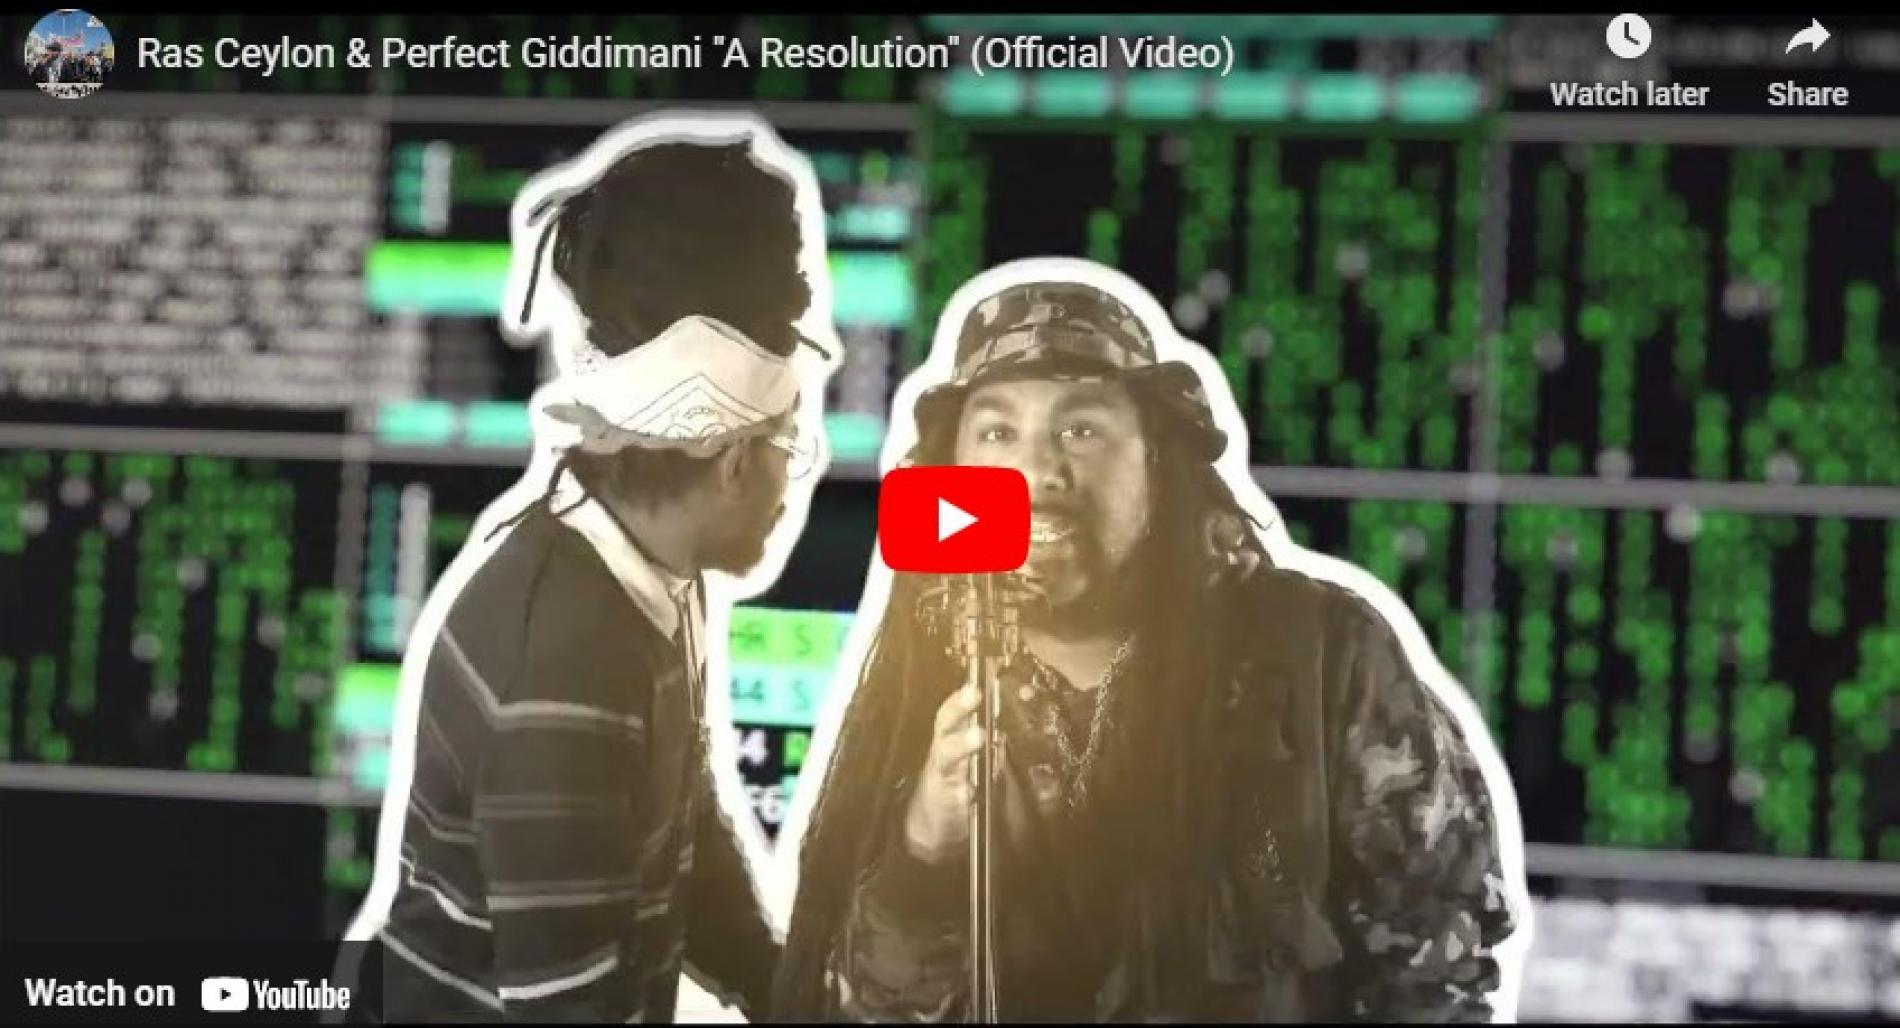 New Music : Ras Ceylon & Perfect Giddimani “A Resolution” (Official Video)